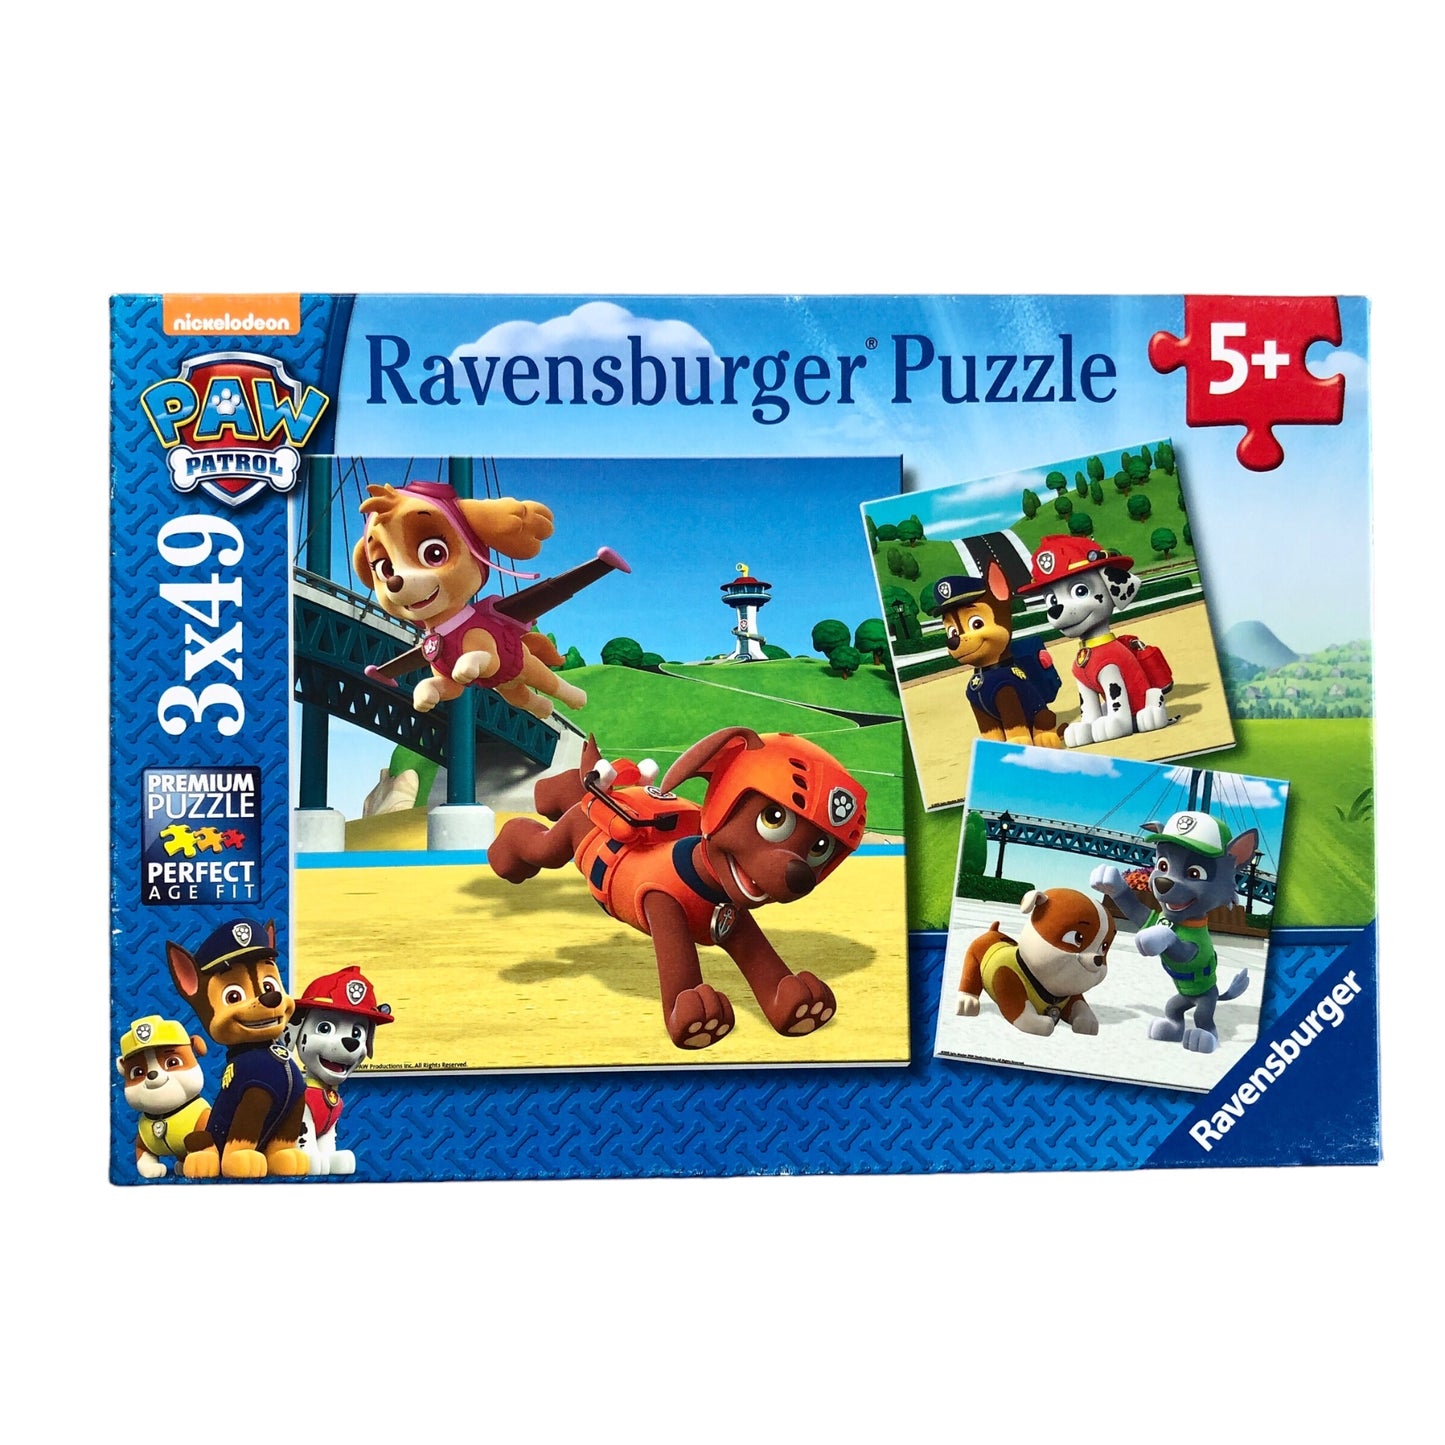 Ravensburger – Puzzle Paw Patrol, Team auf 4 Pfoten